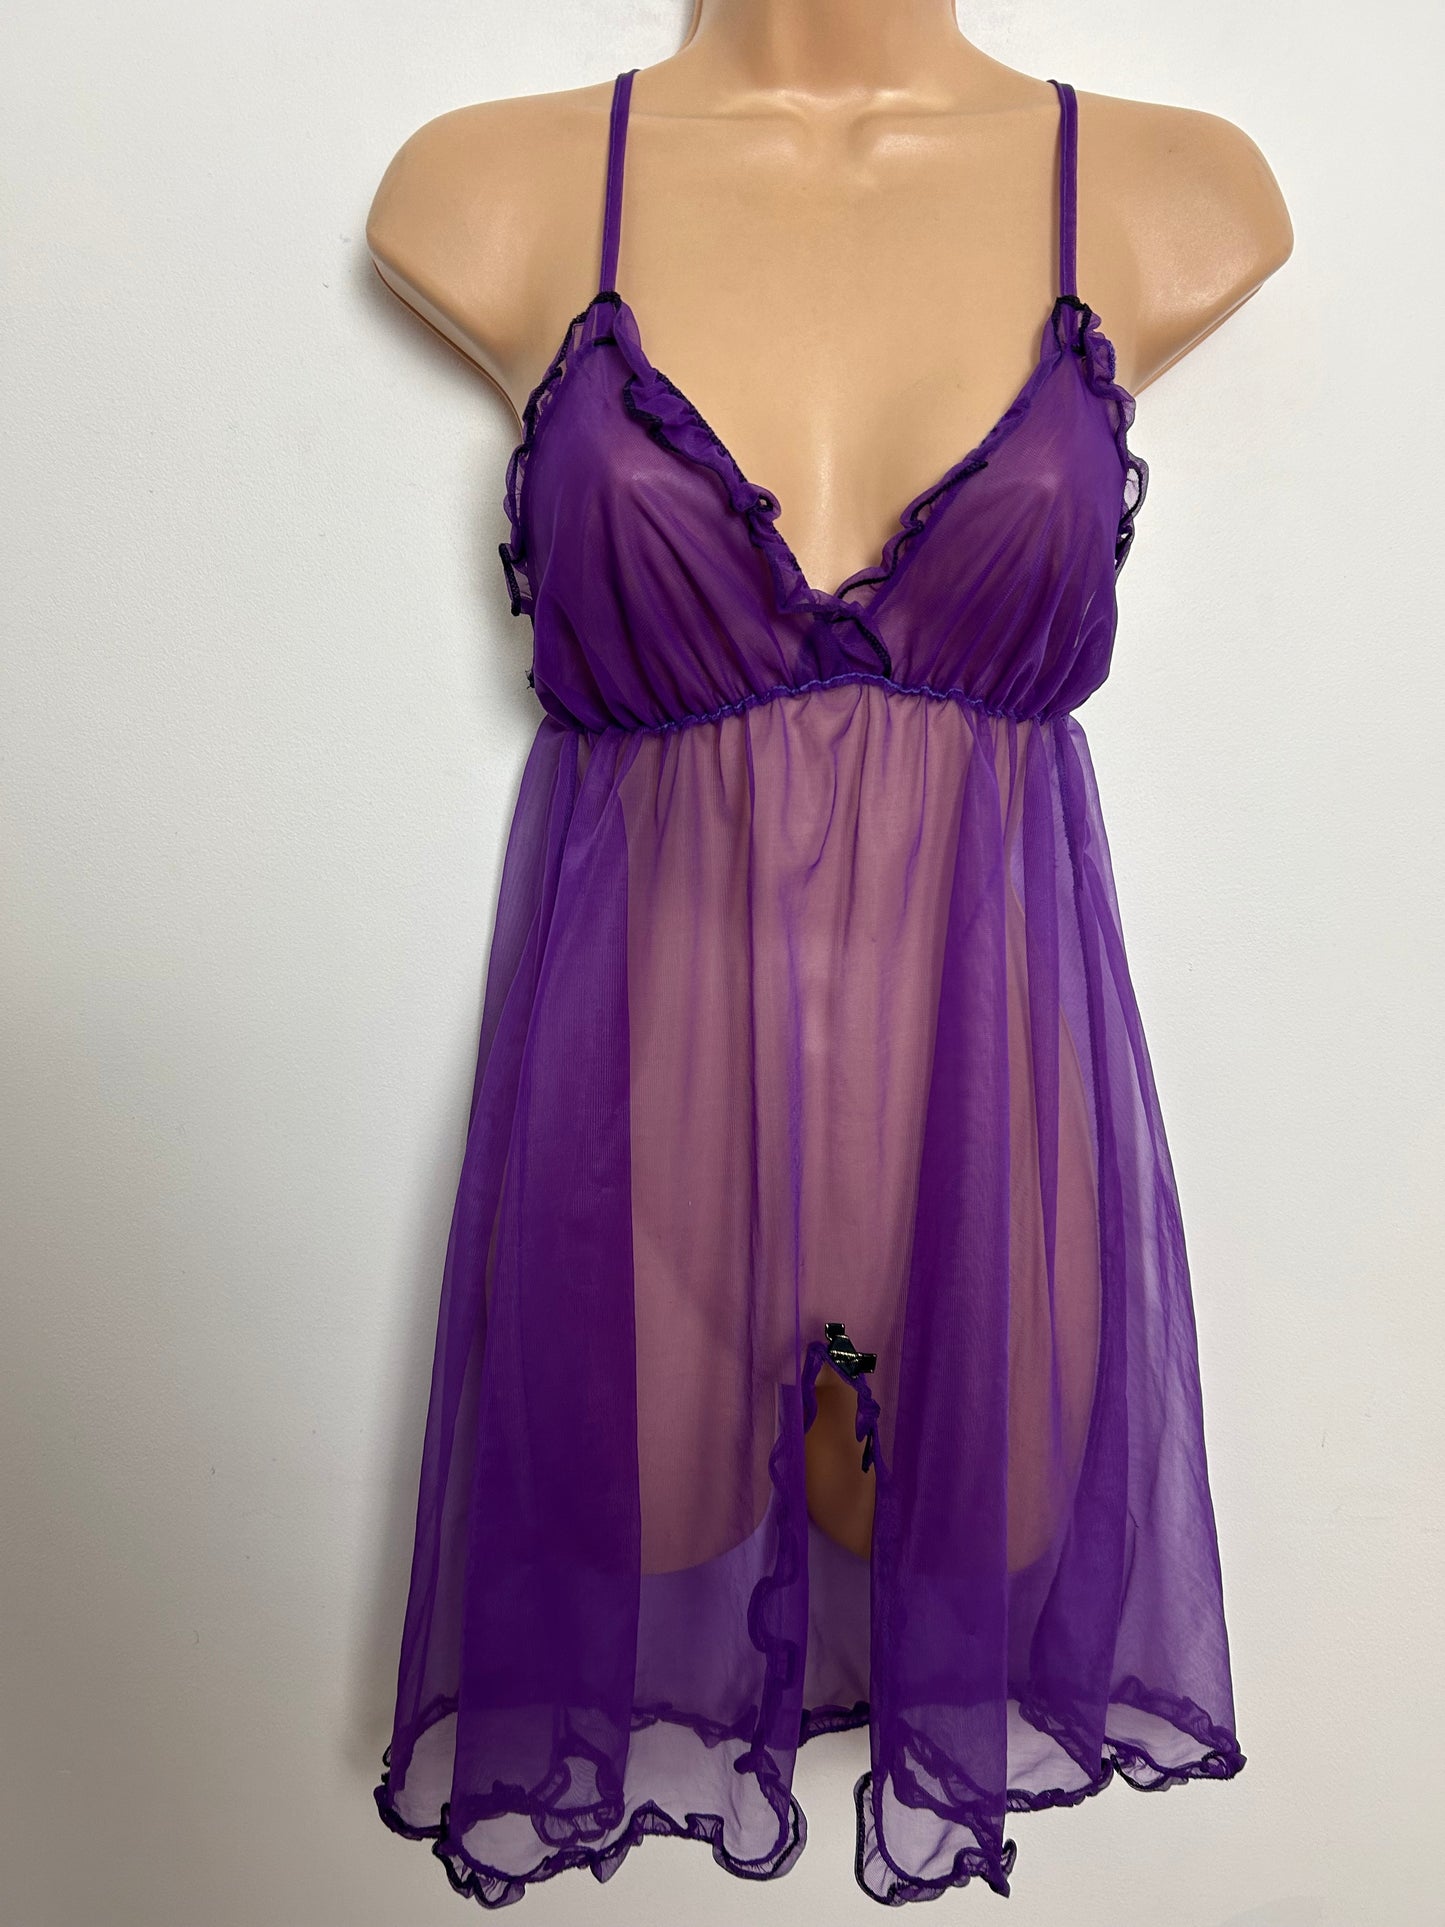 Vintage 1970s UK Size 6 Purple Semi Sheer Strappy Sexy Baby Doll Negligee Nightie Nightdress Slip